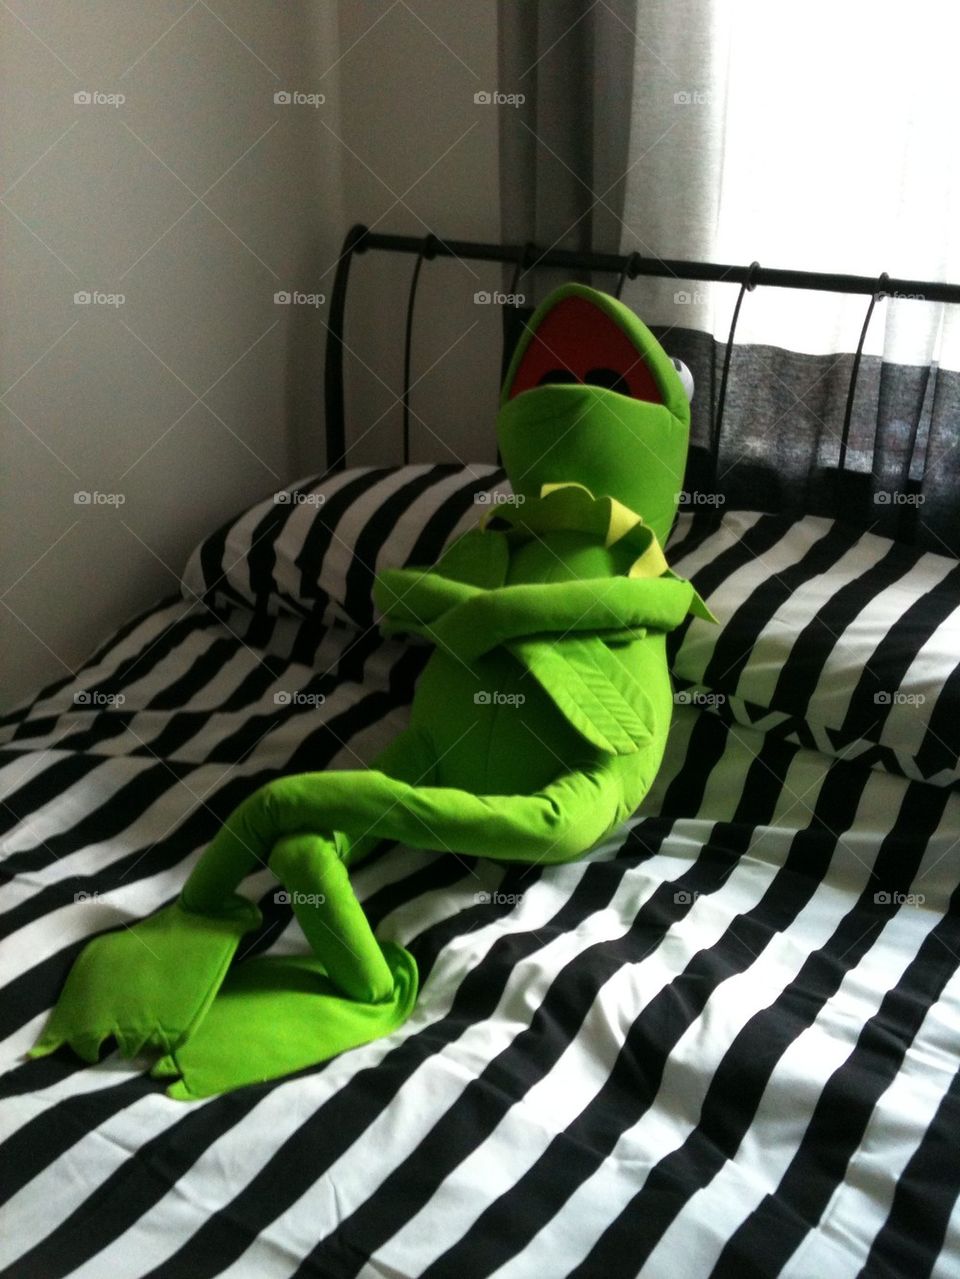 Kermit contemplating